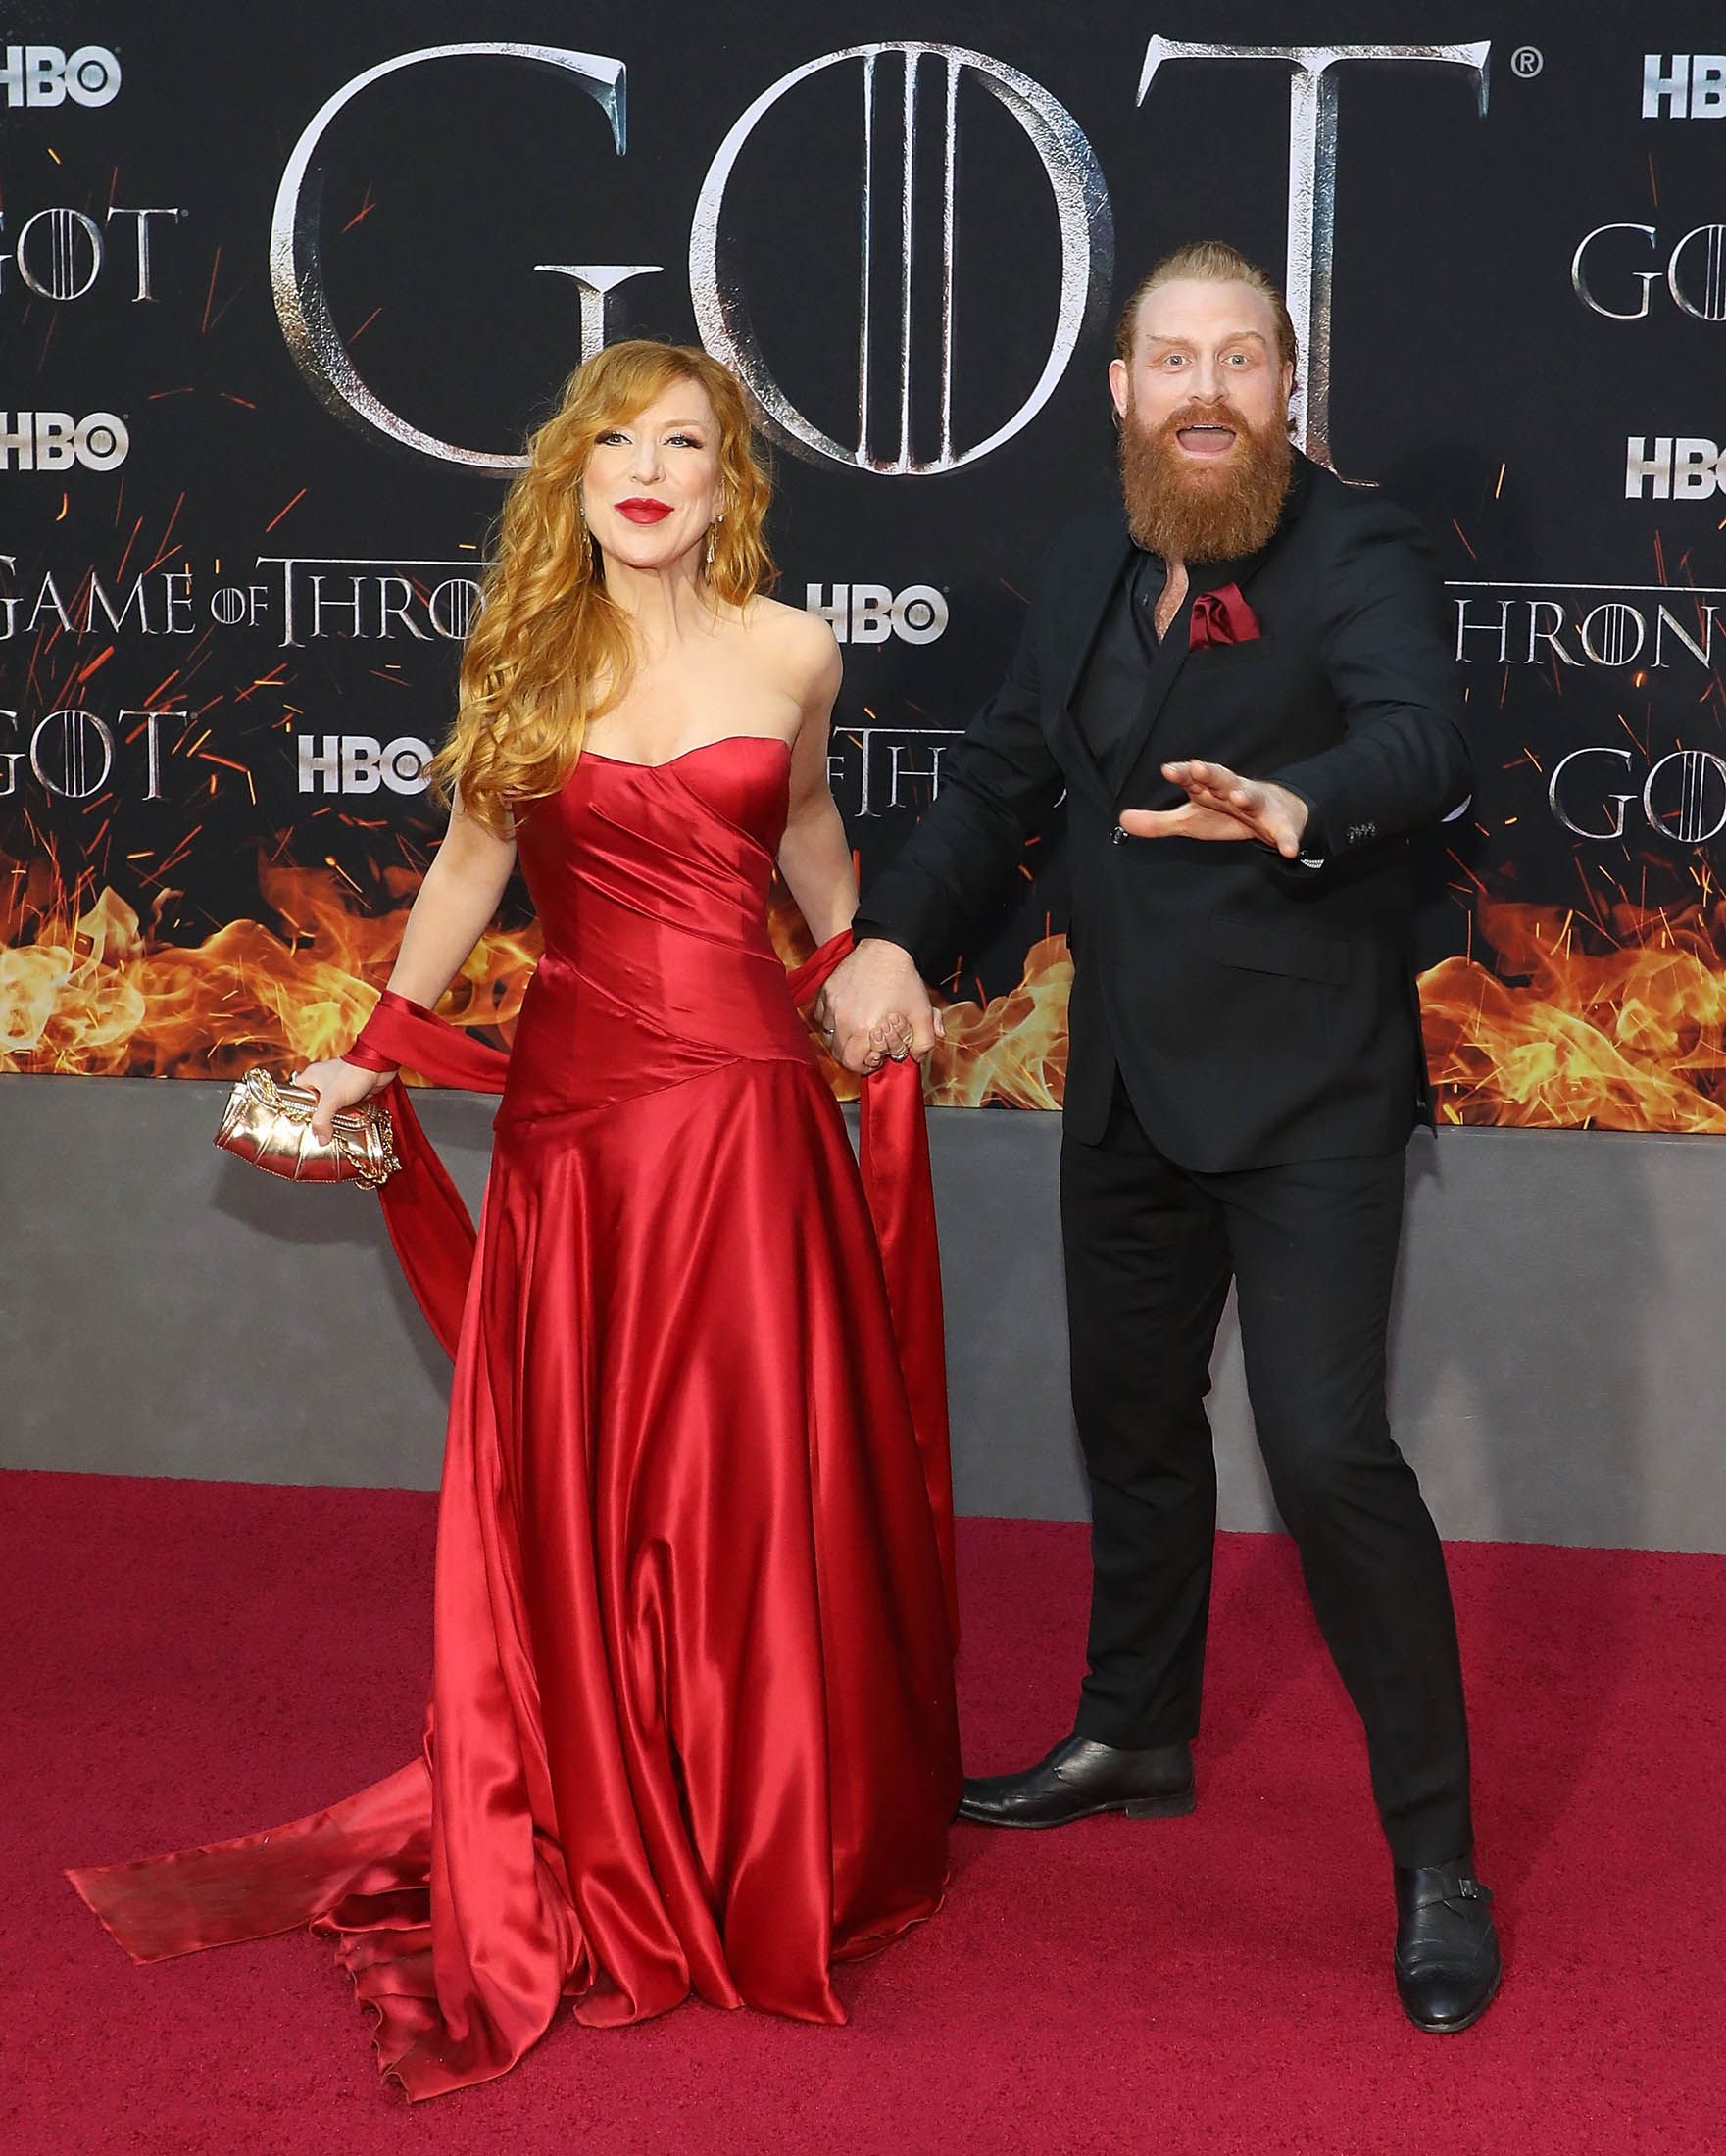 Best Style of Thrones Carpet - GoT Season 8 Looks